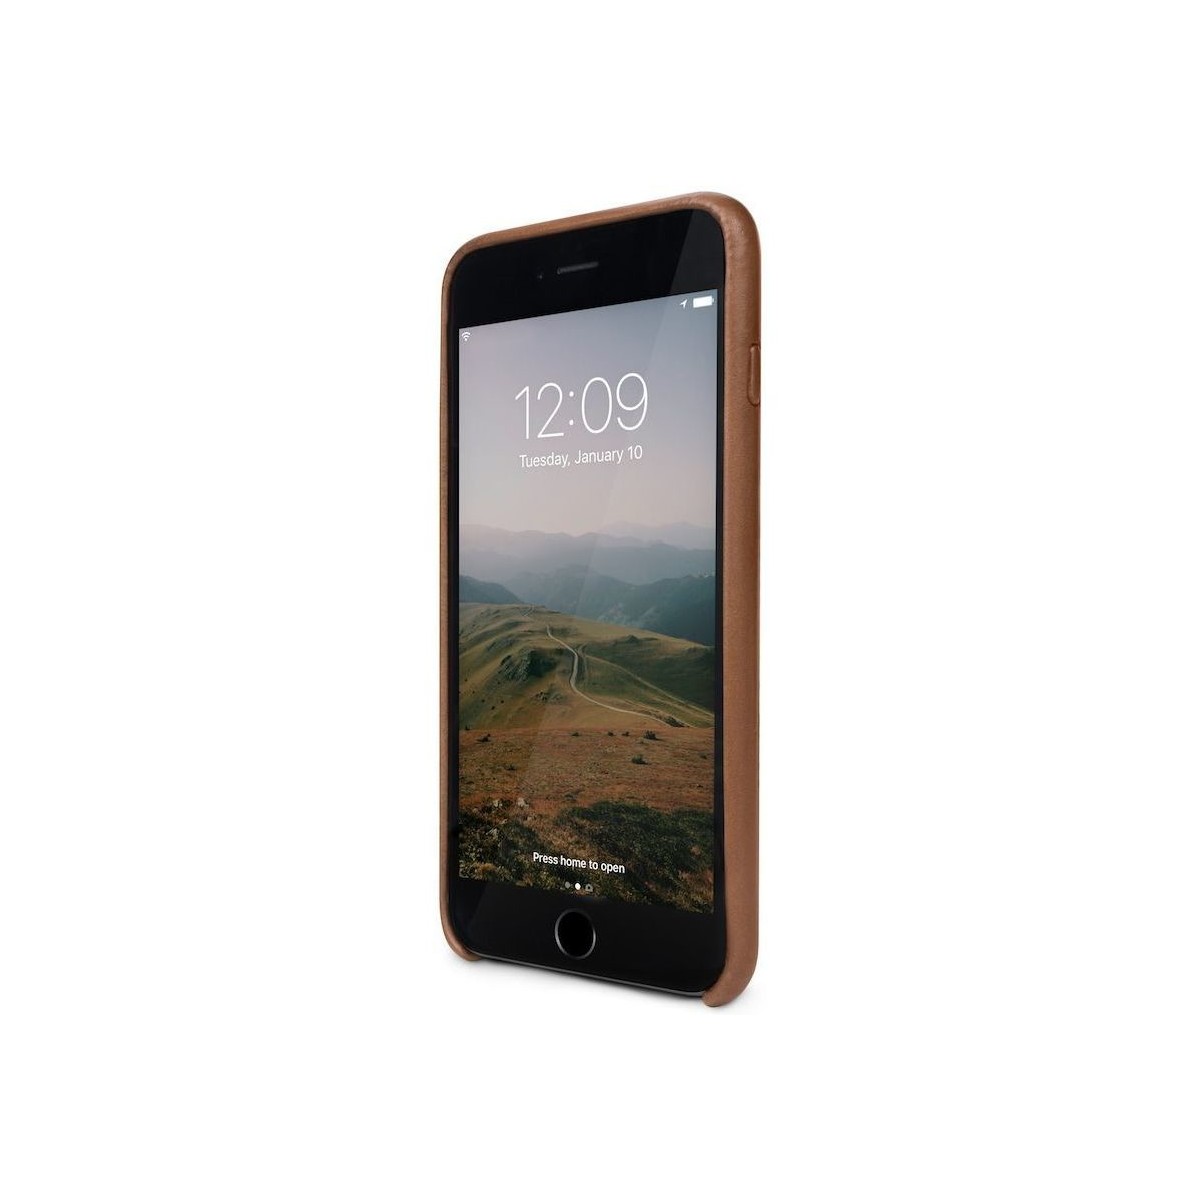 Sacs Sacs Twelve South Relaxed Leather Case iPhone 8 Plus / 7 Plus 